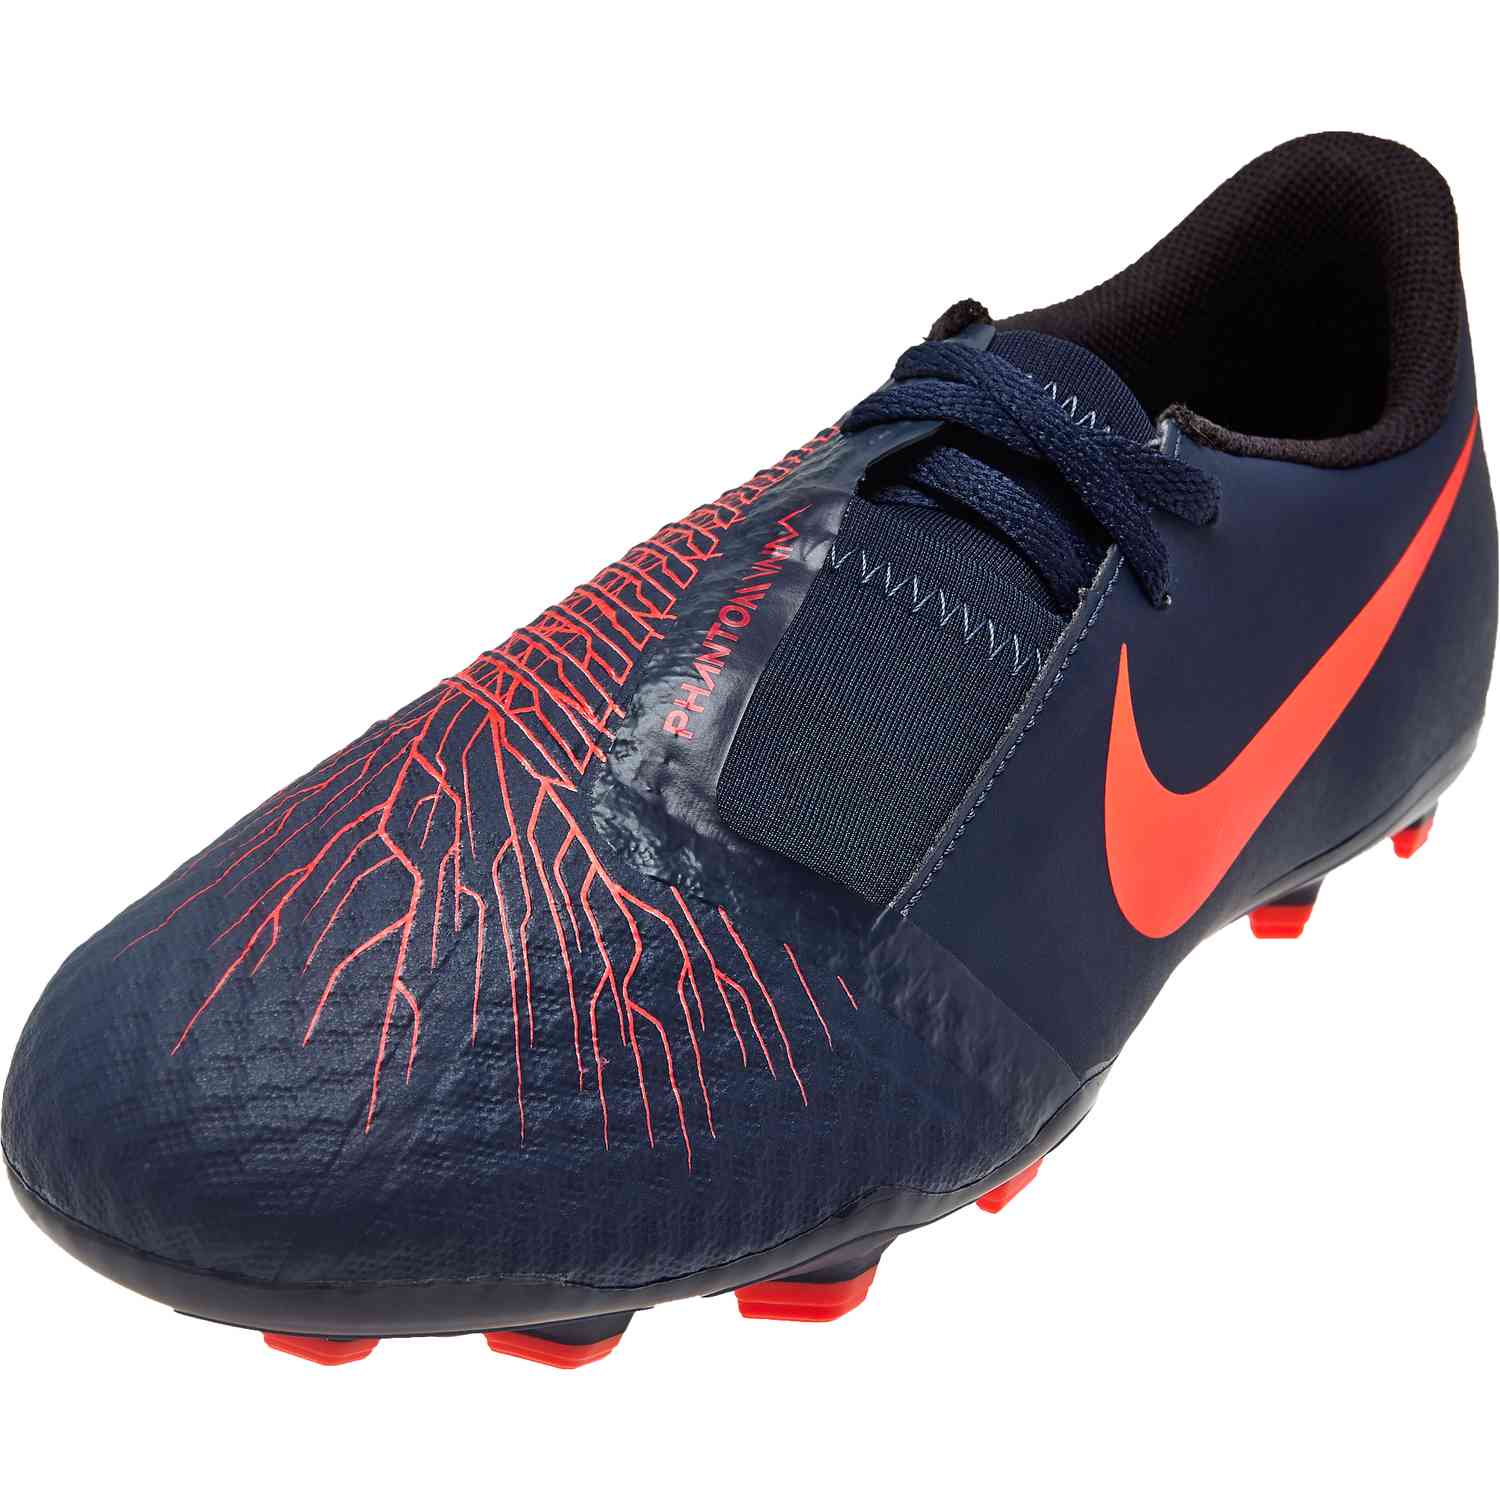 Nike Soccer phantom venom astro turf boots in red ASOS